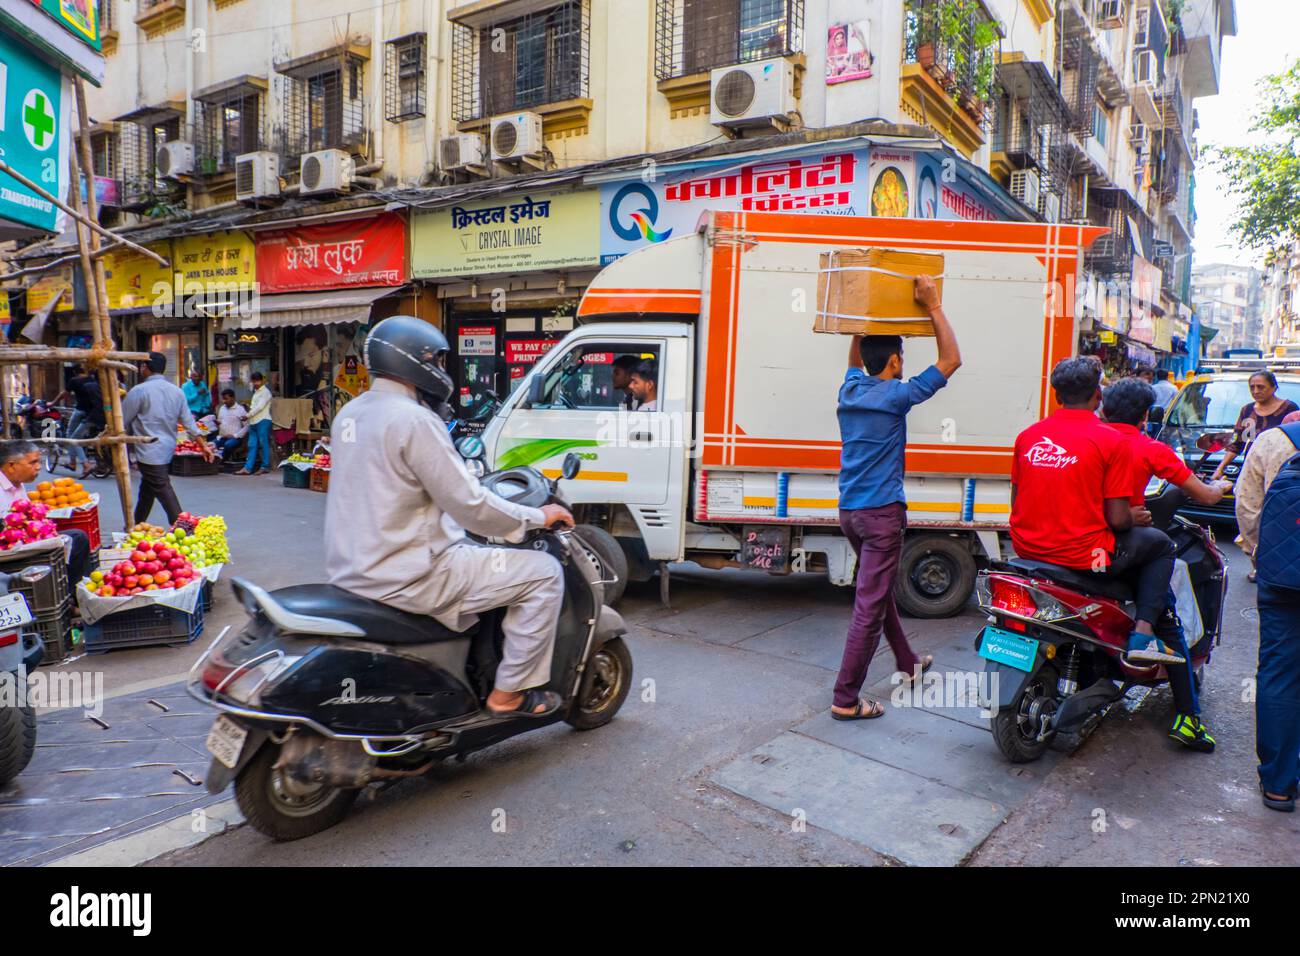 Street life, Bori Bazar, Fort, Mumbai, India Stock Photo